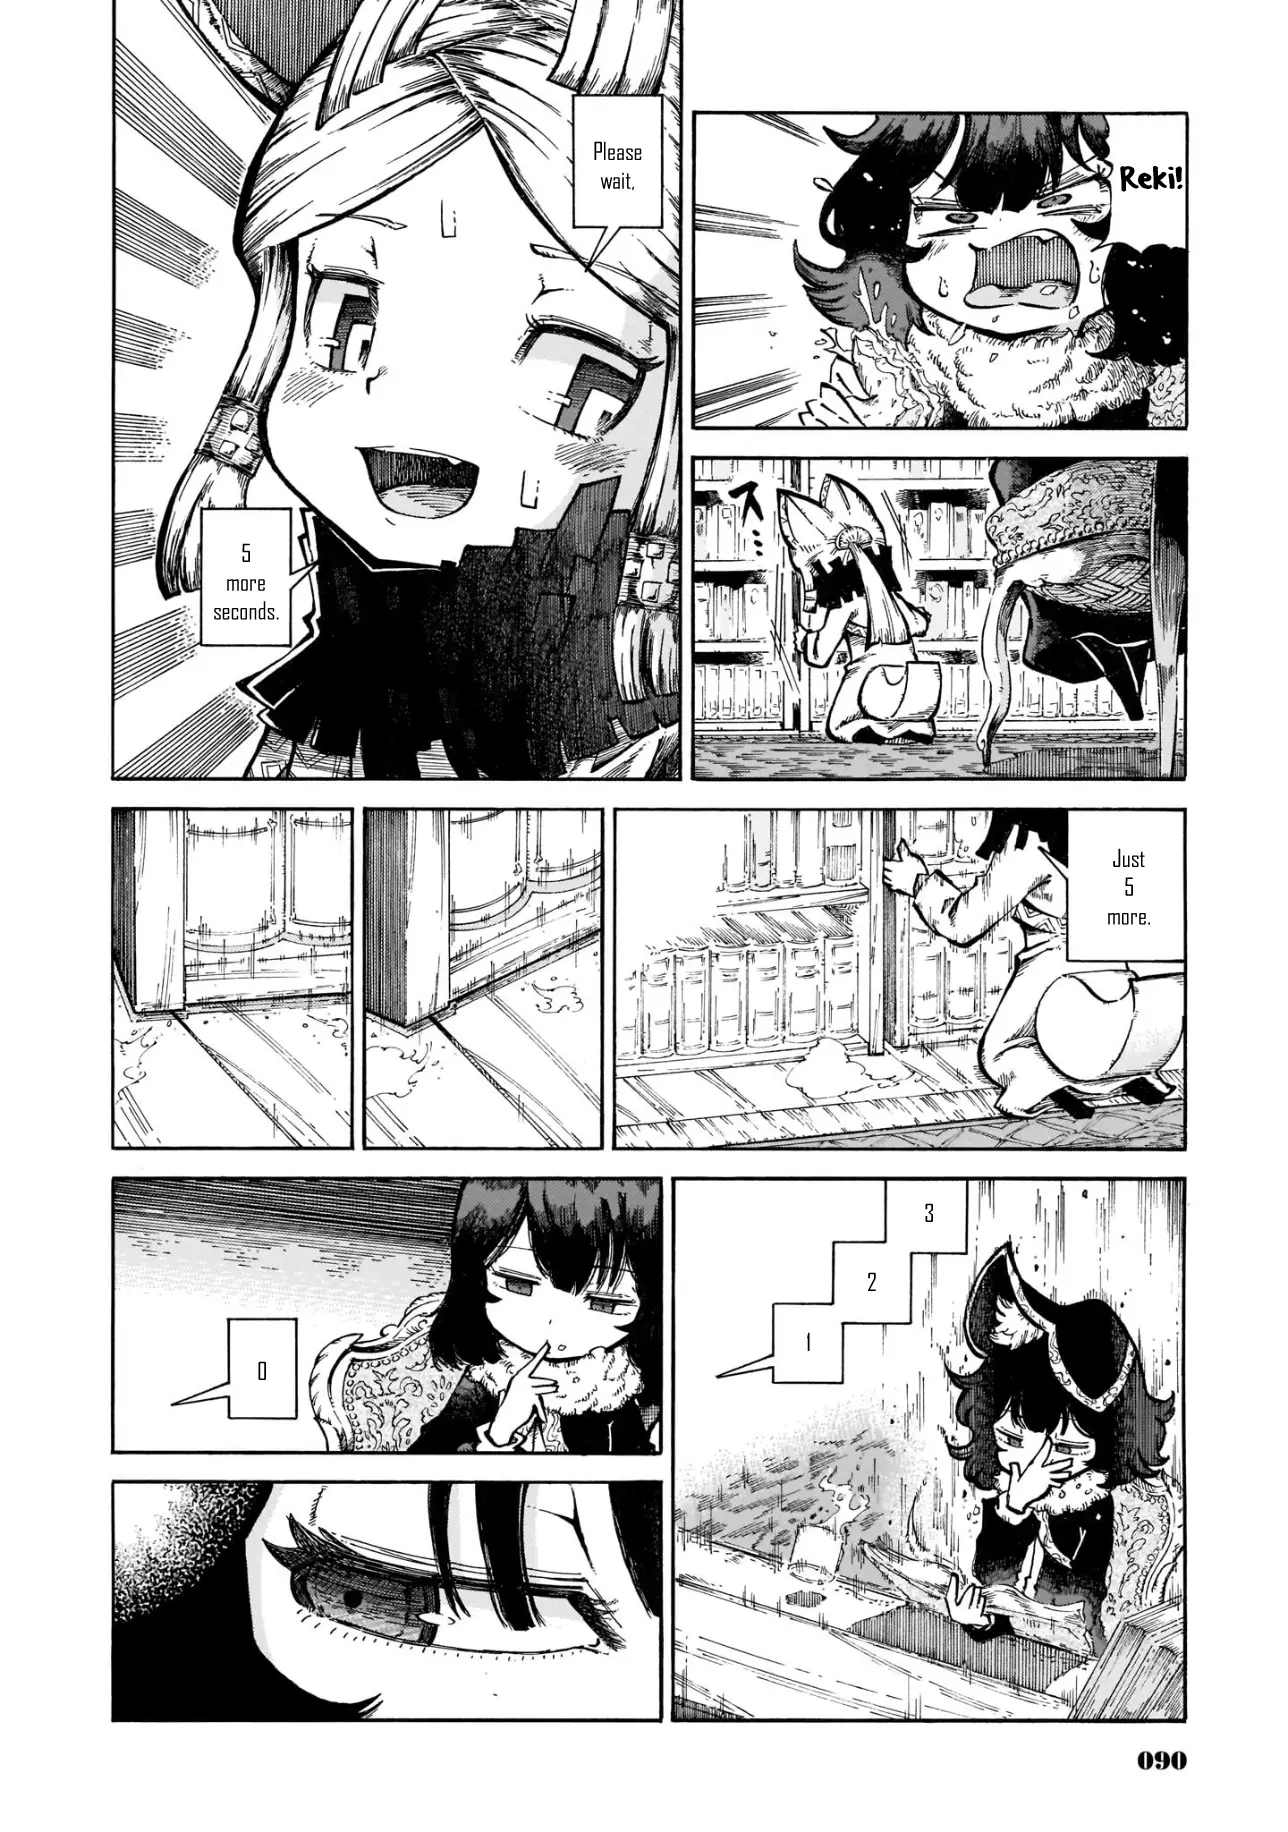 Reki Yomi - 19 page 2